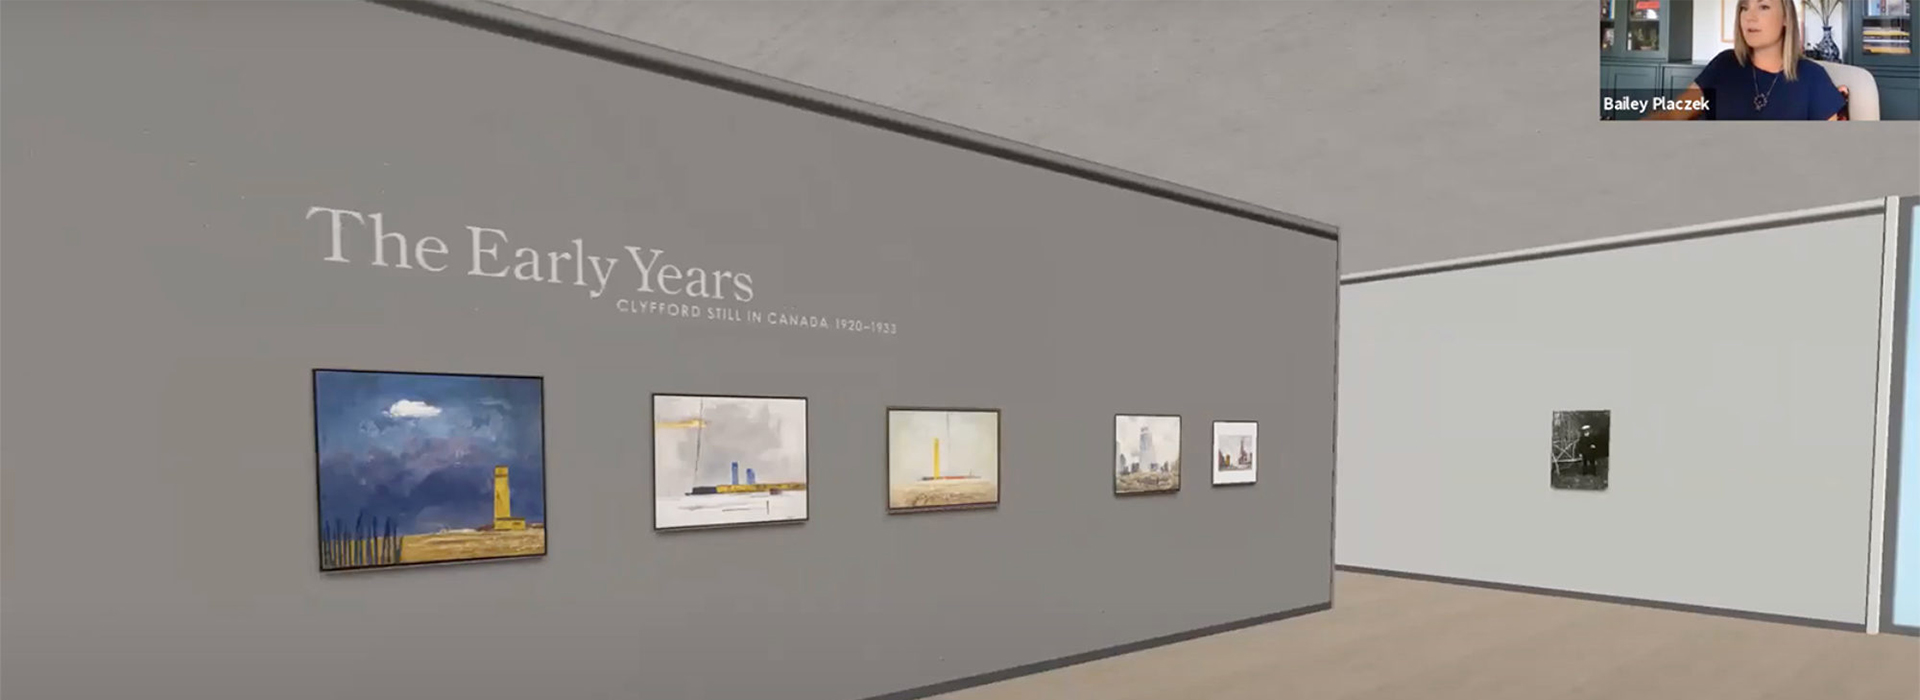 Screenshot from Virtual Curatorial Highlights Tour